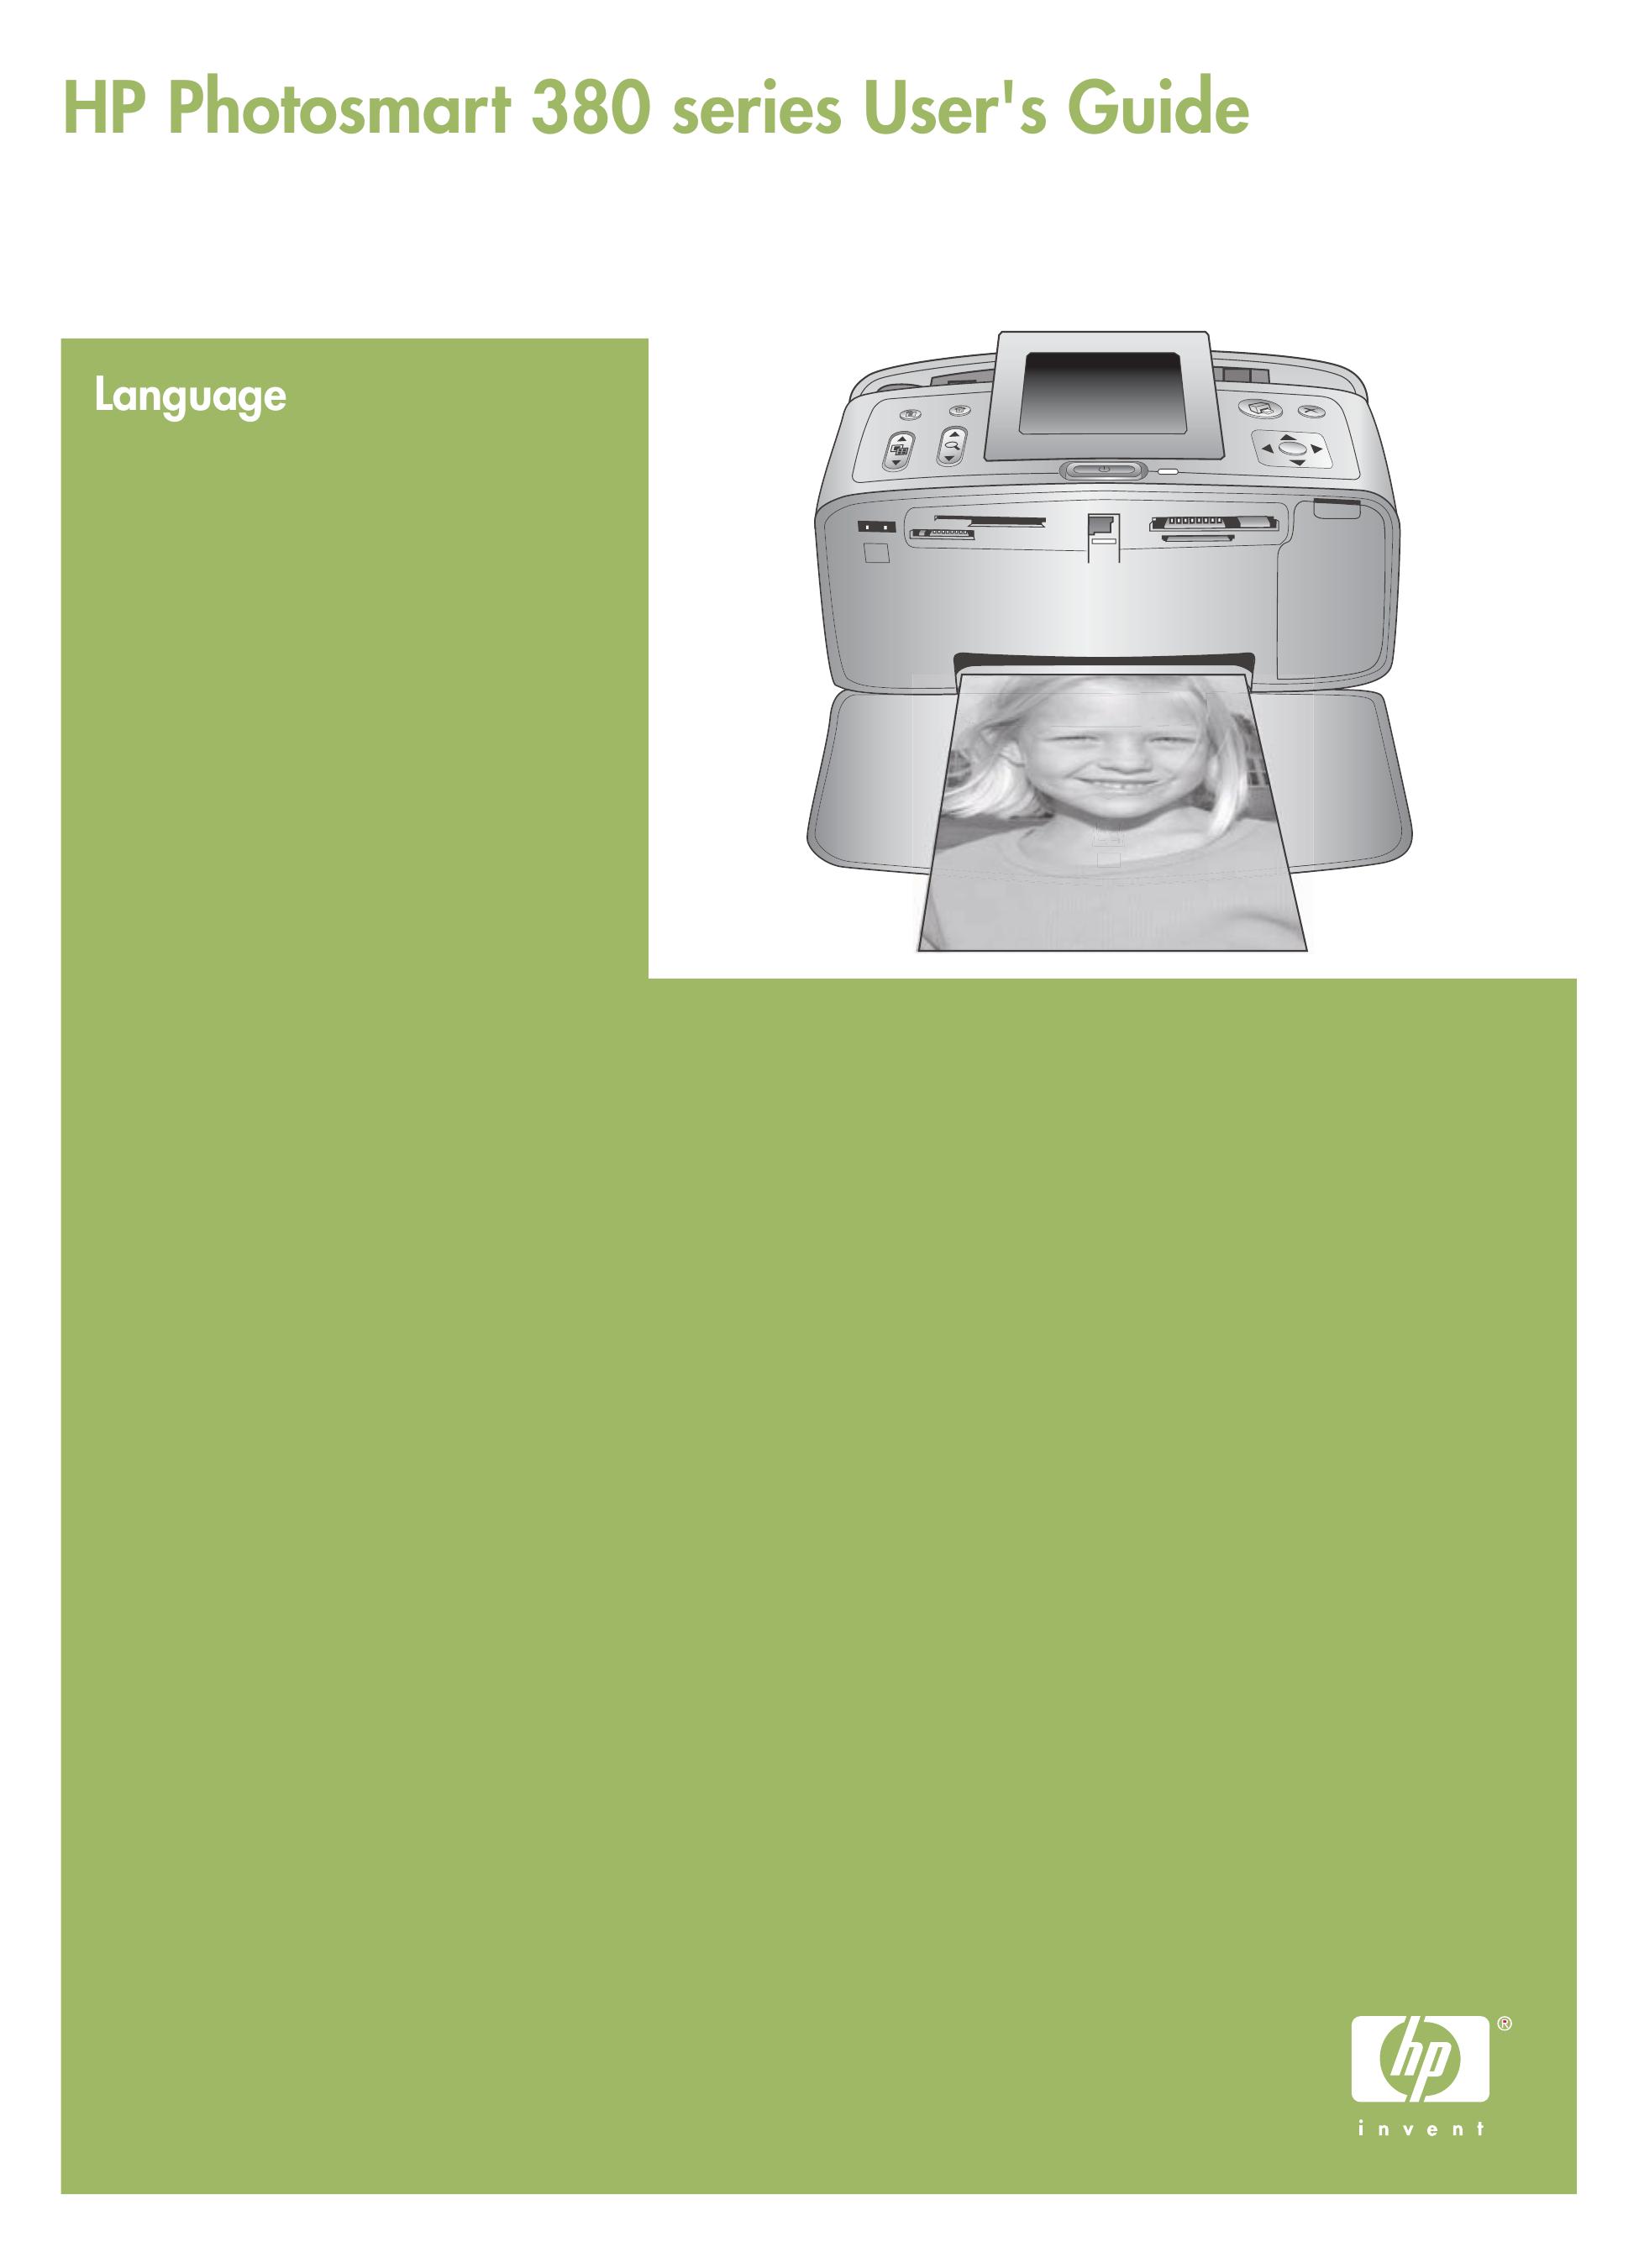 HP (Hewlett-Packard) 380 Photo Printer User Manual